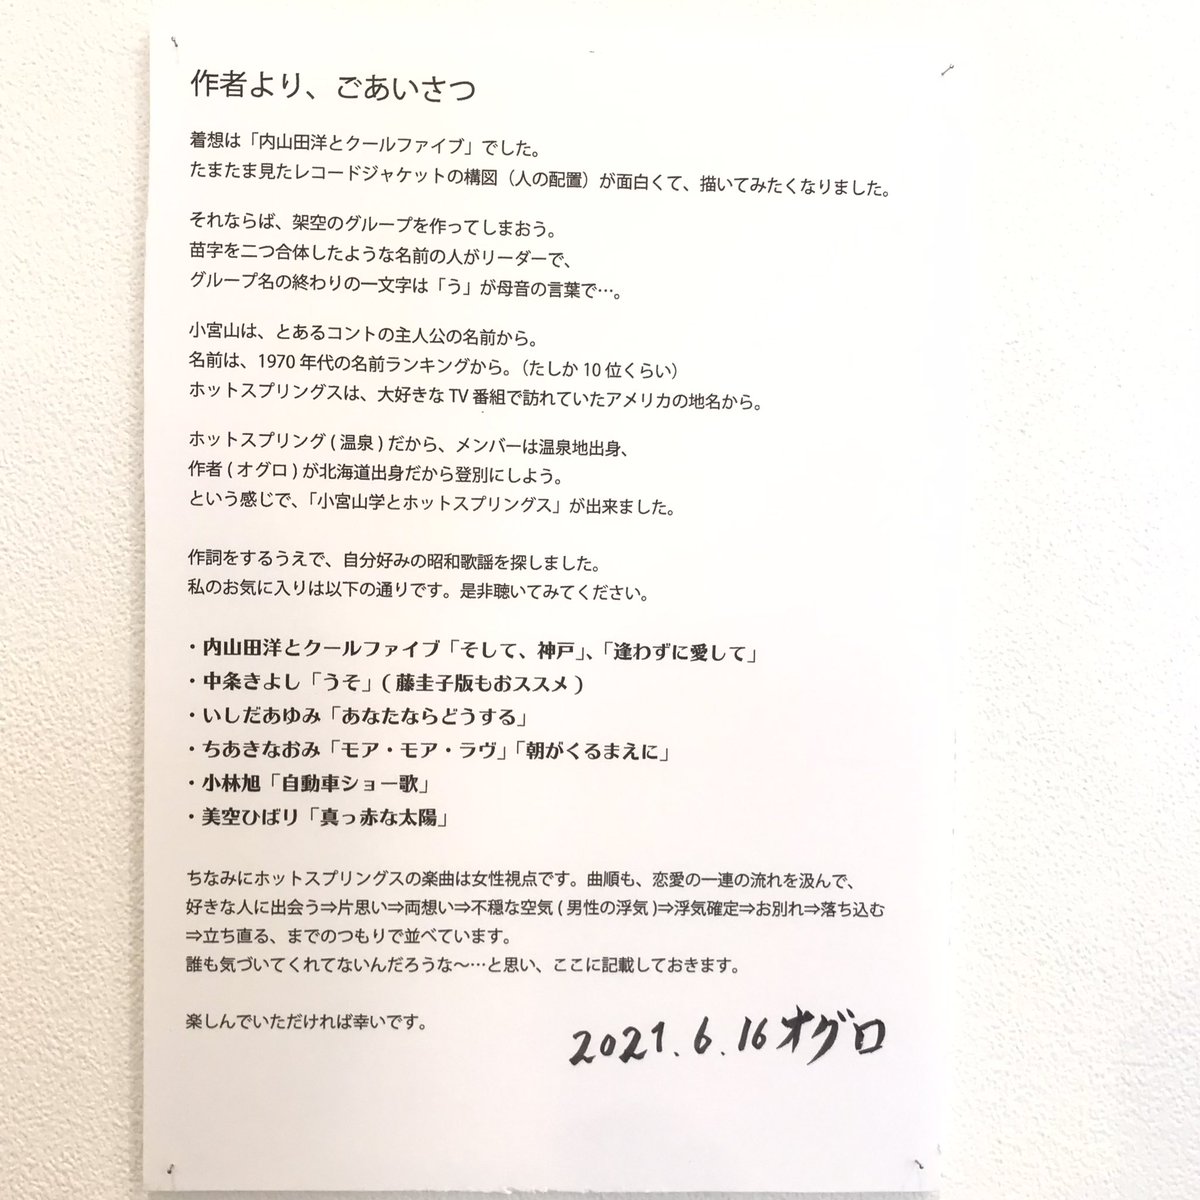 オグロ 居眠事典第二版 電車版販売中 Oguro Oguro Twitter